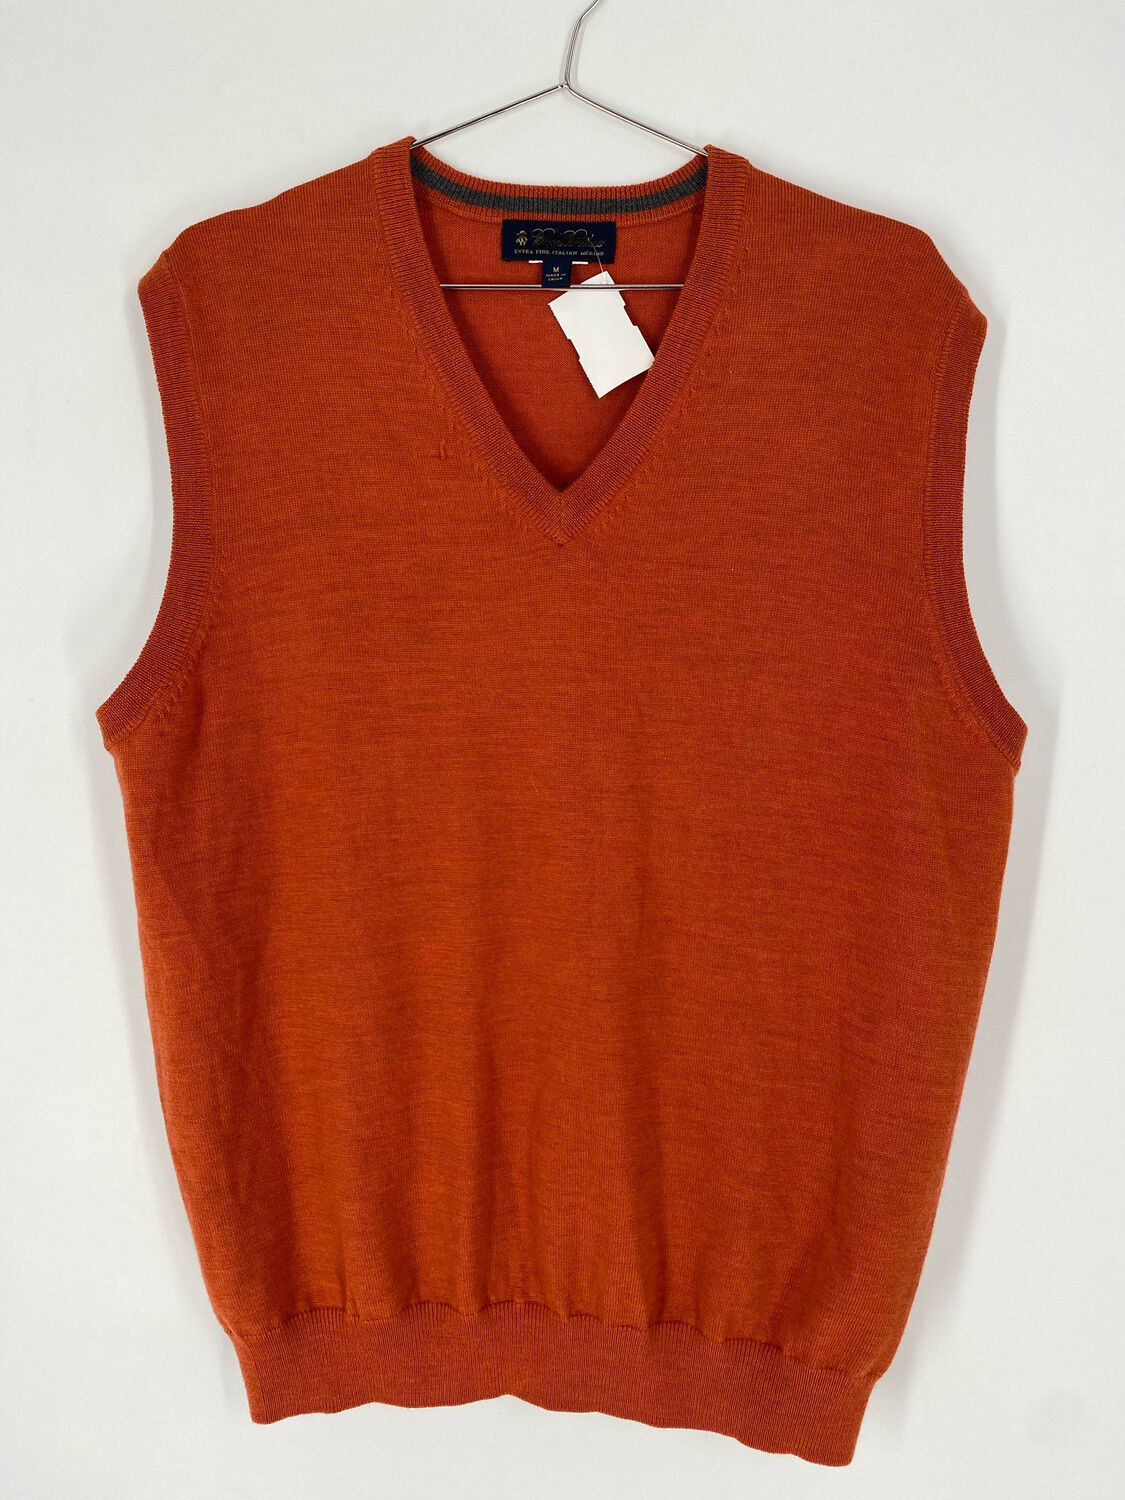 Vintage Brooks Brothers Orange Sweater Vest Size M